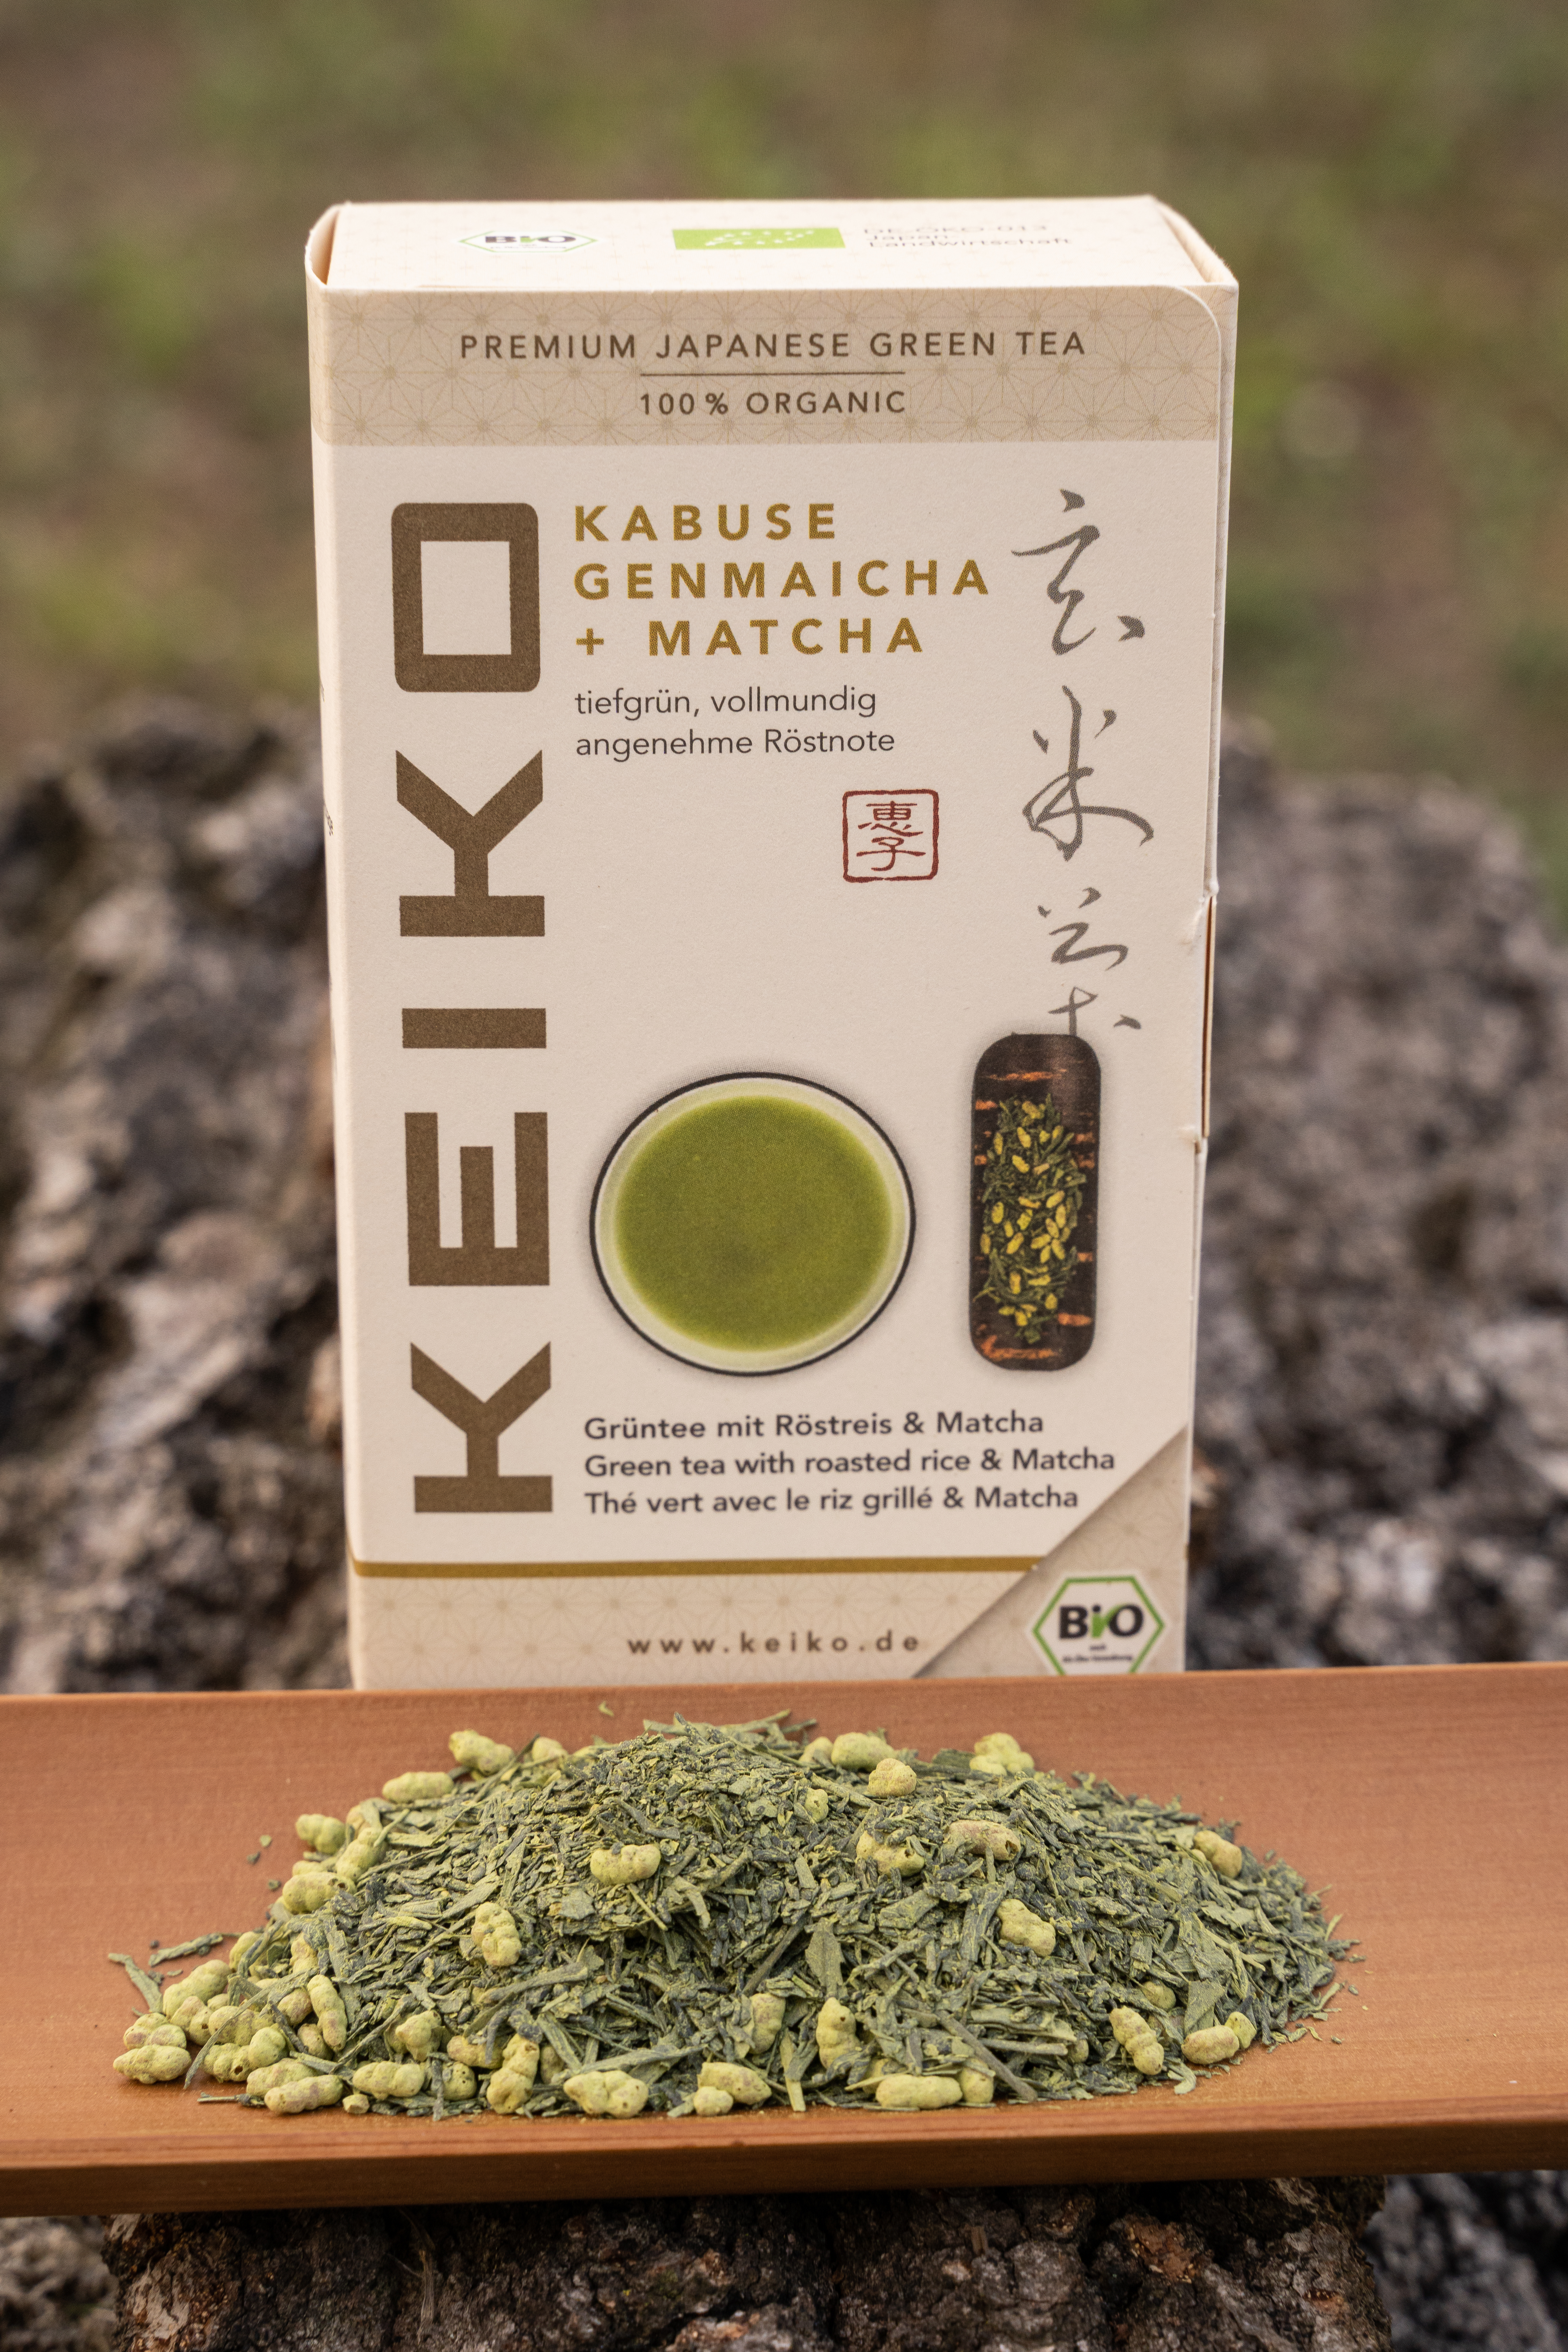 Genmaicha with Matcha - Organic Japanese Green Tea